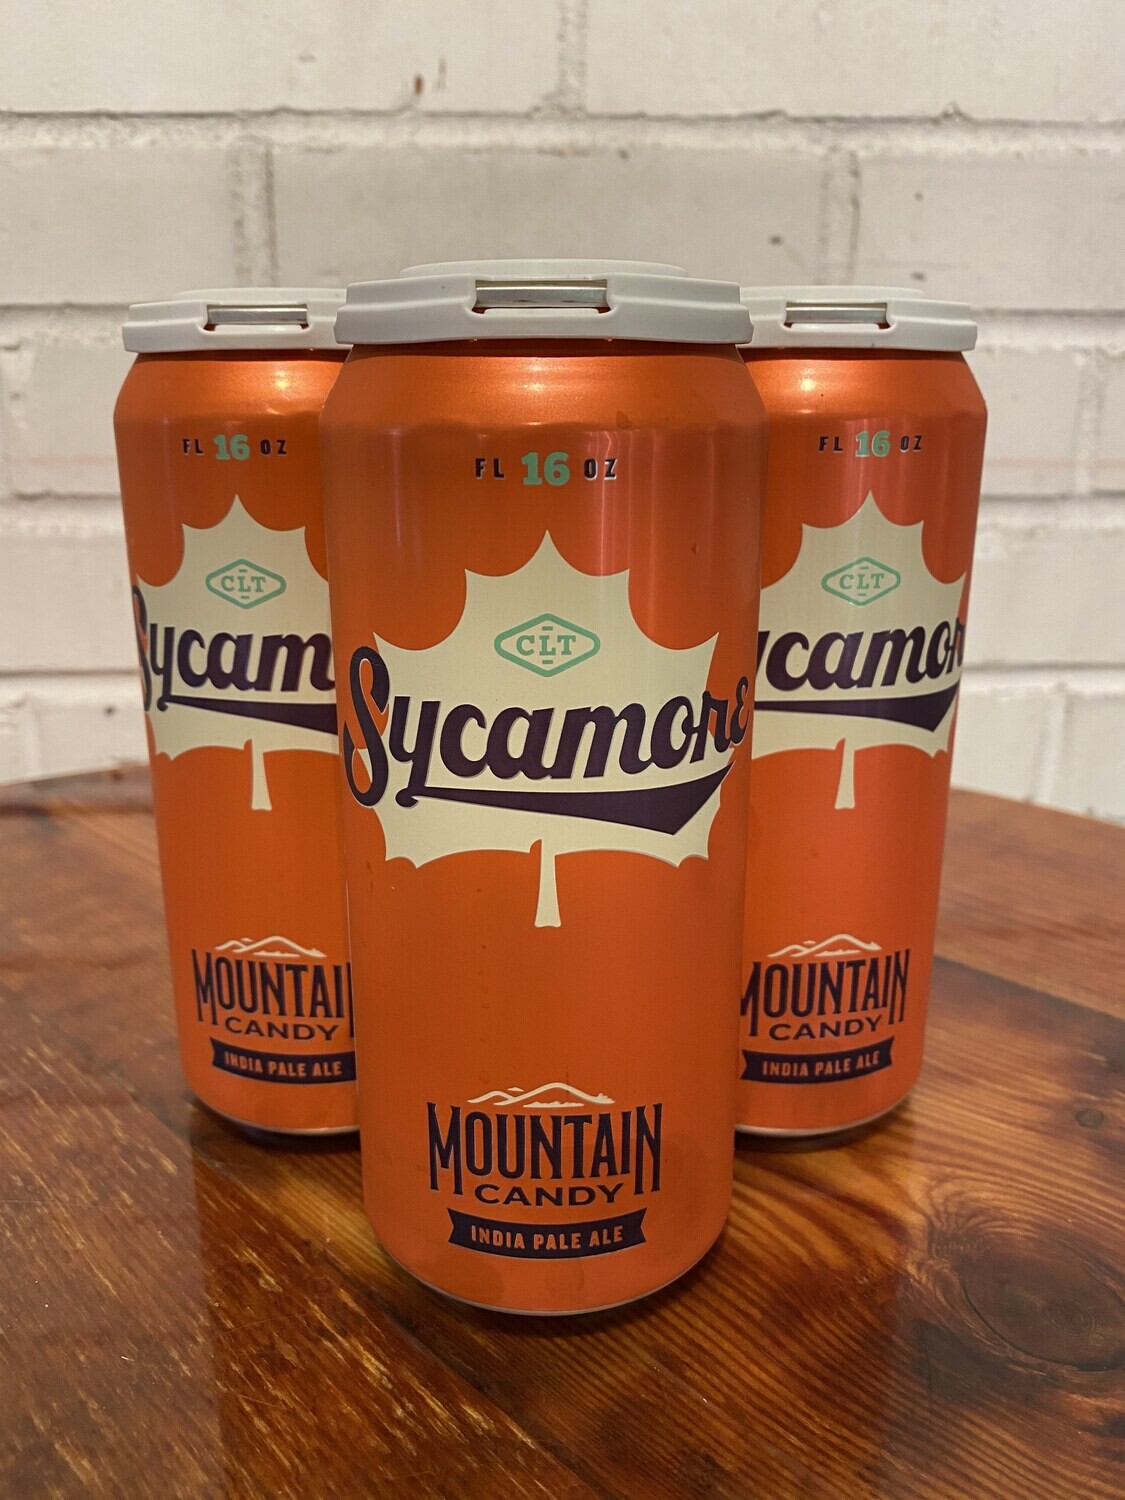 Sycamore Mountain Candy IPA (4pk)